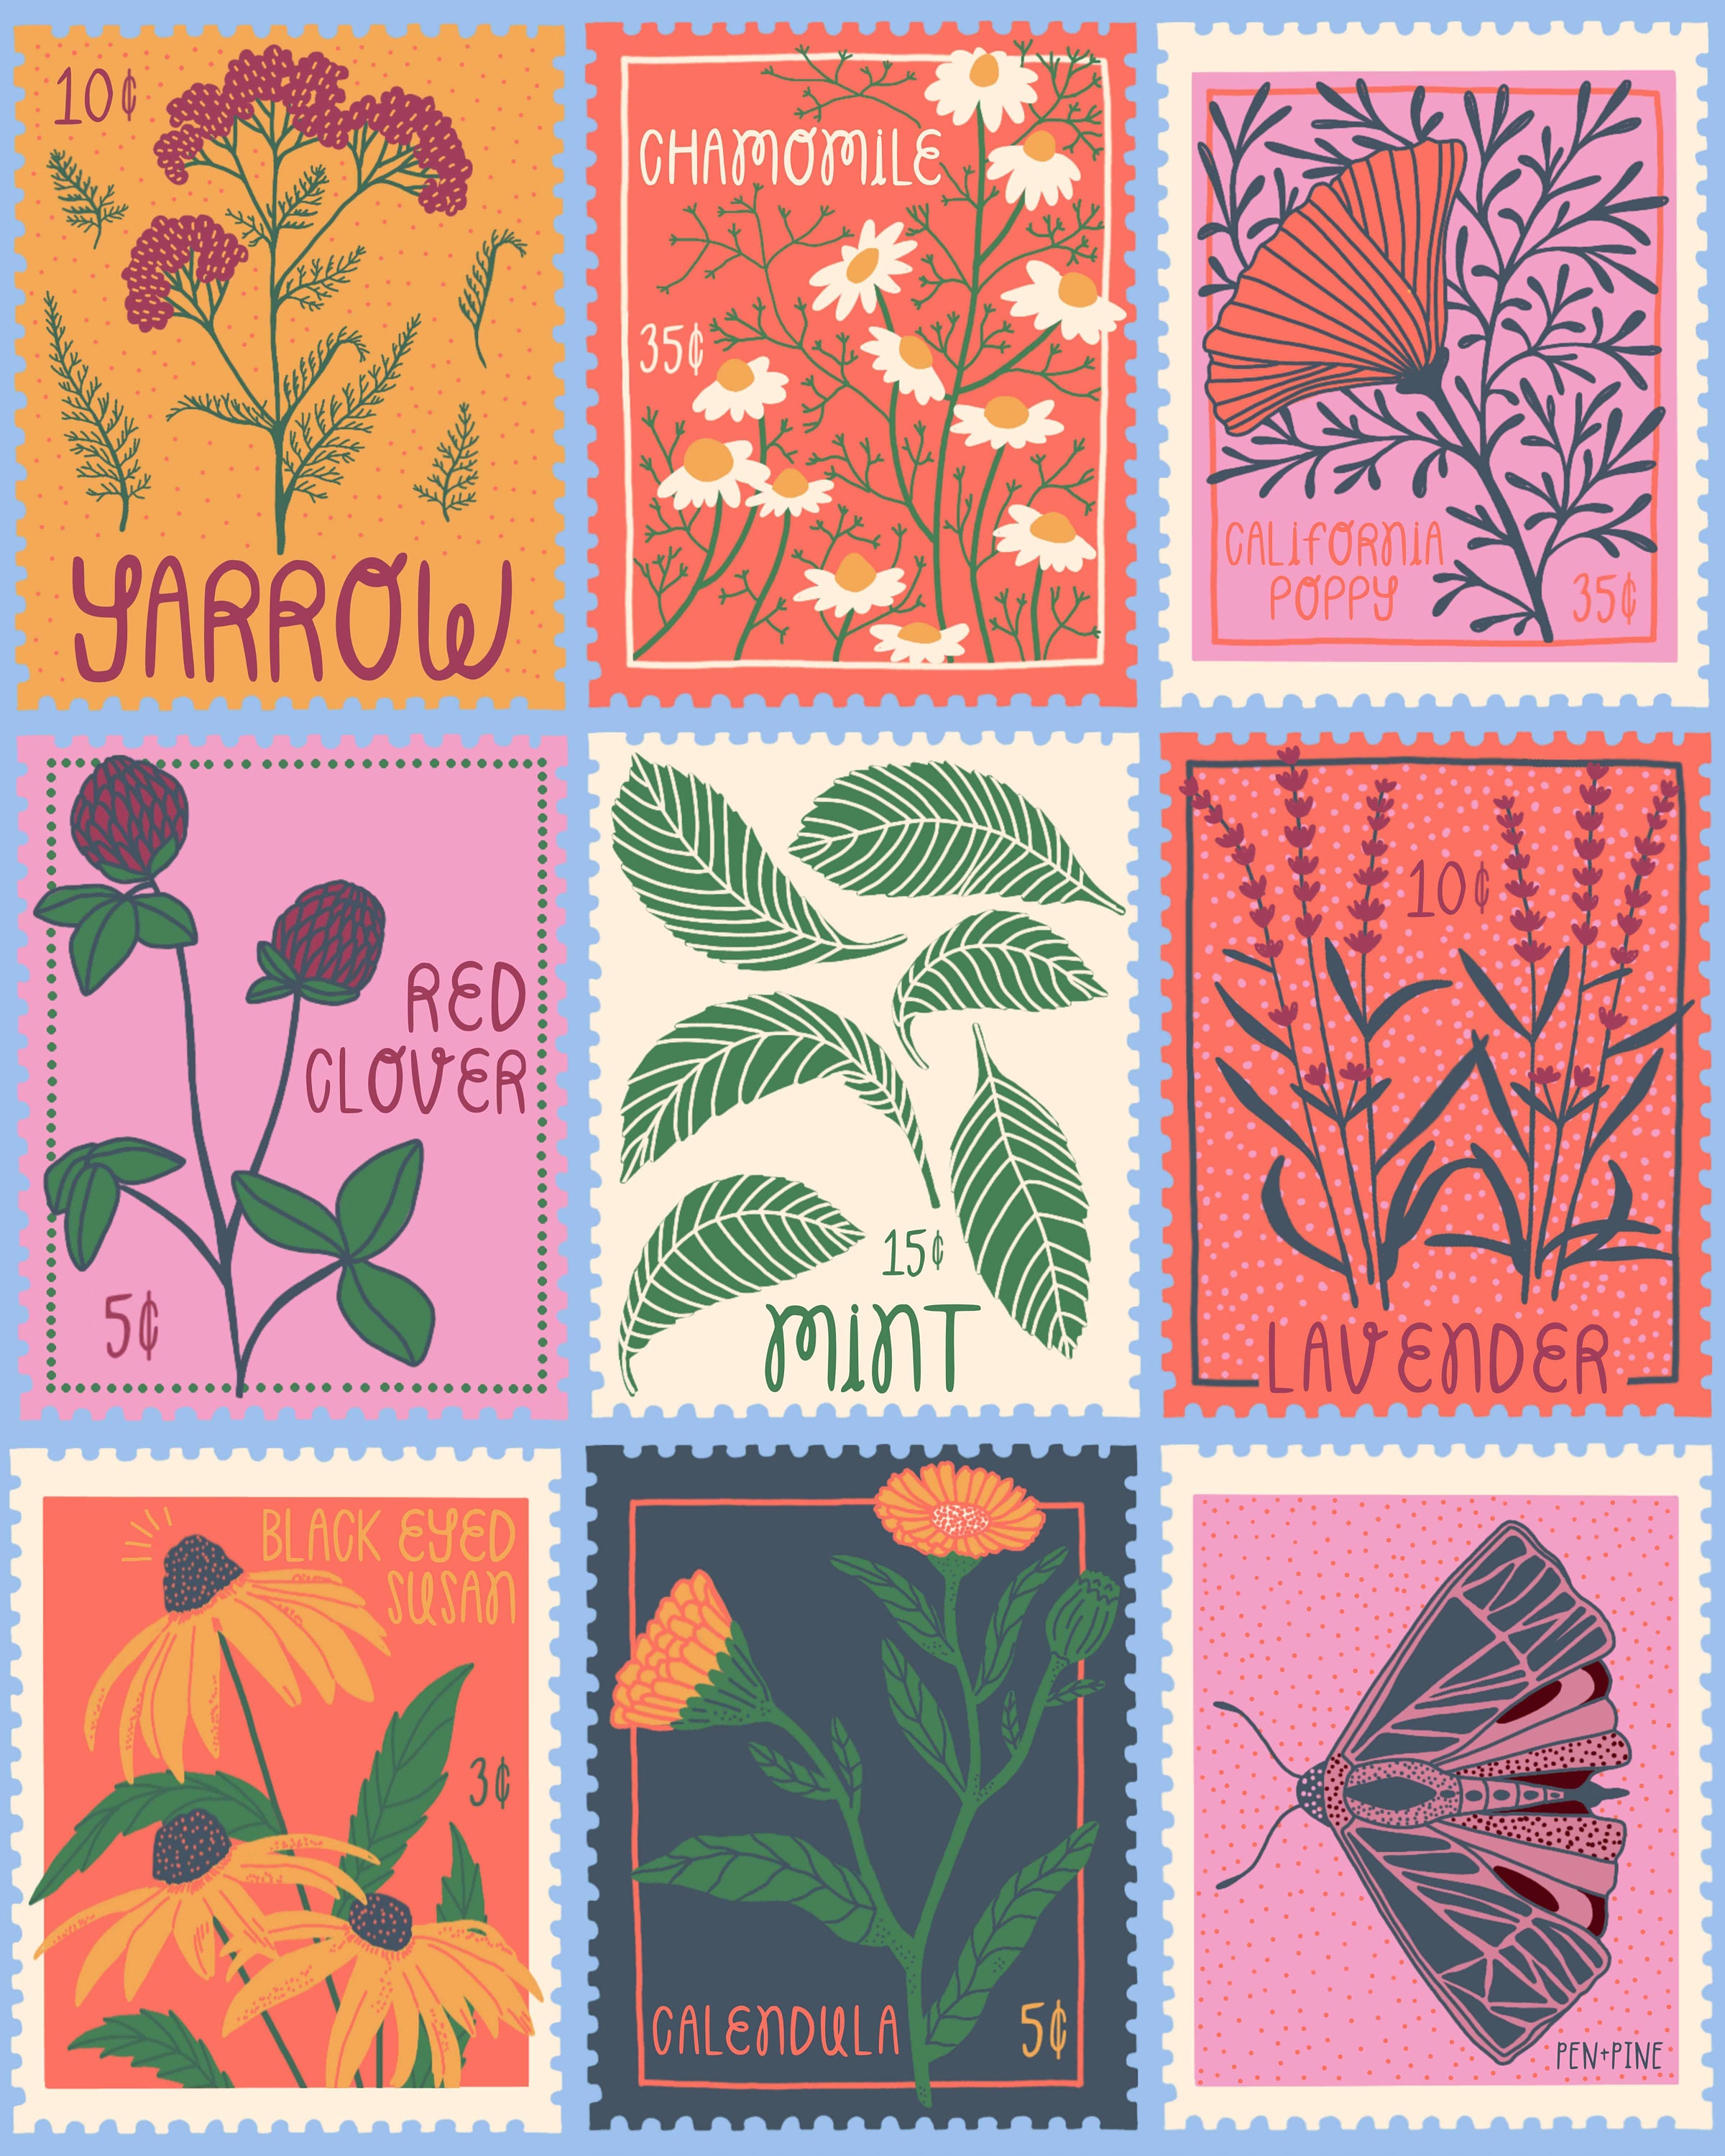 TEN Pasqueflower Unused Forever 60c stamps, Wedding Postage, Flower stamps